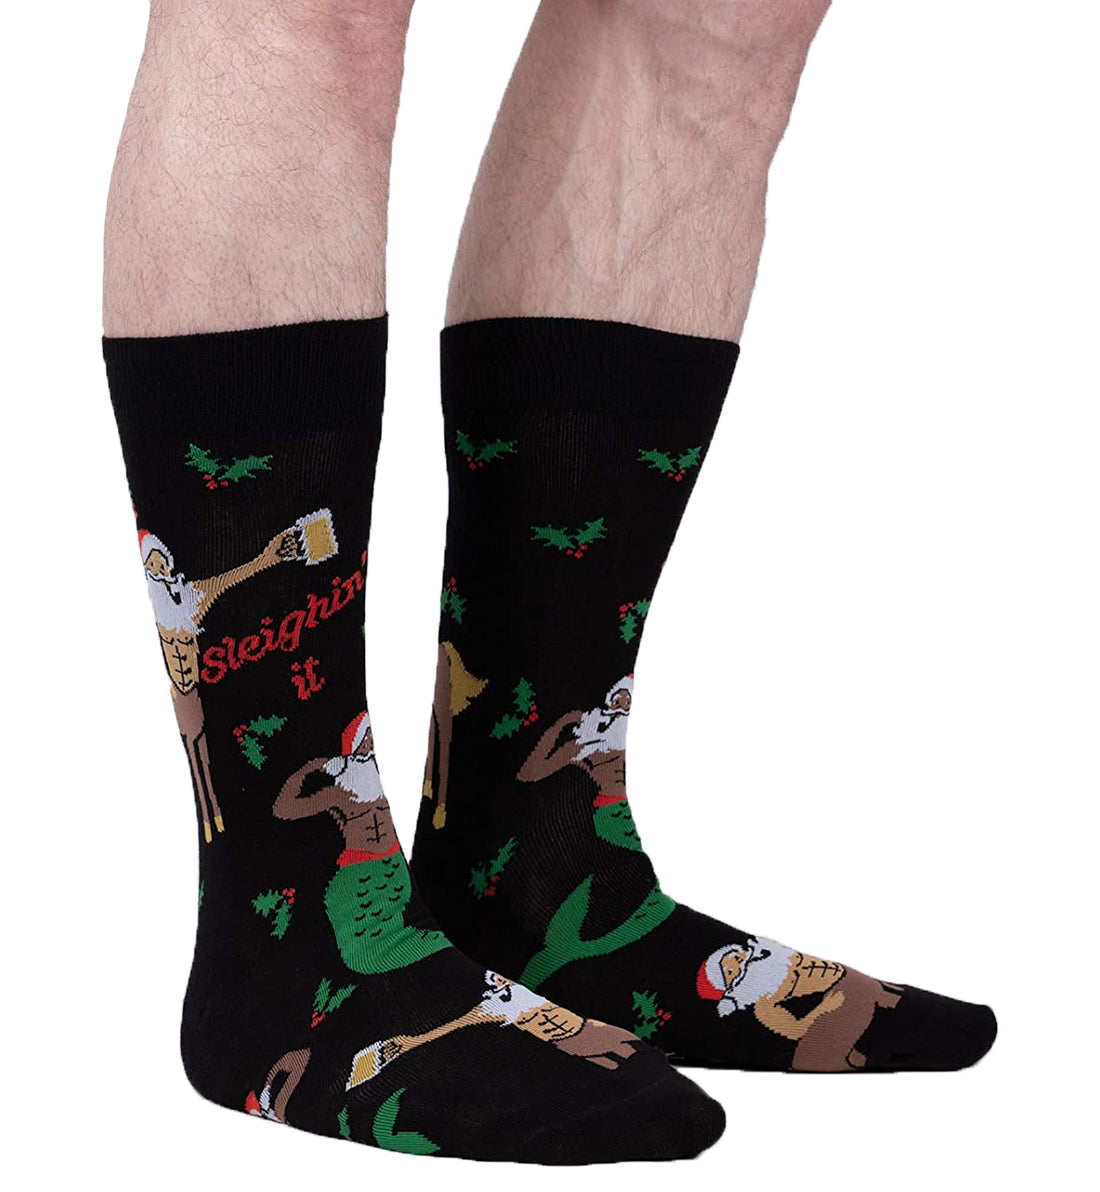 SOCK it to me Men's Crew Socks (mef0476),Sleighin' It - Sleighin' It,One Size